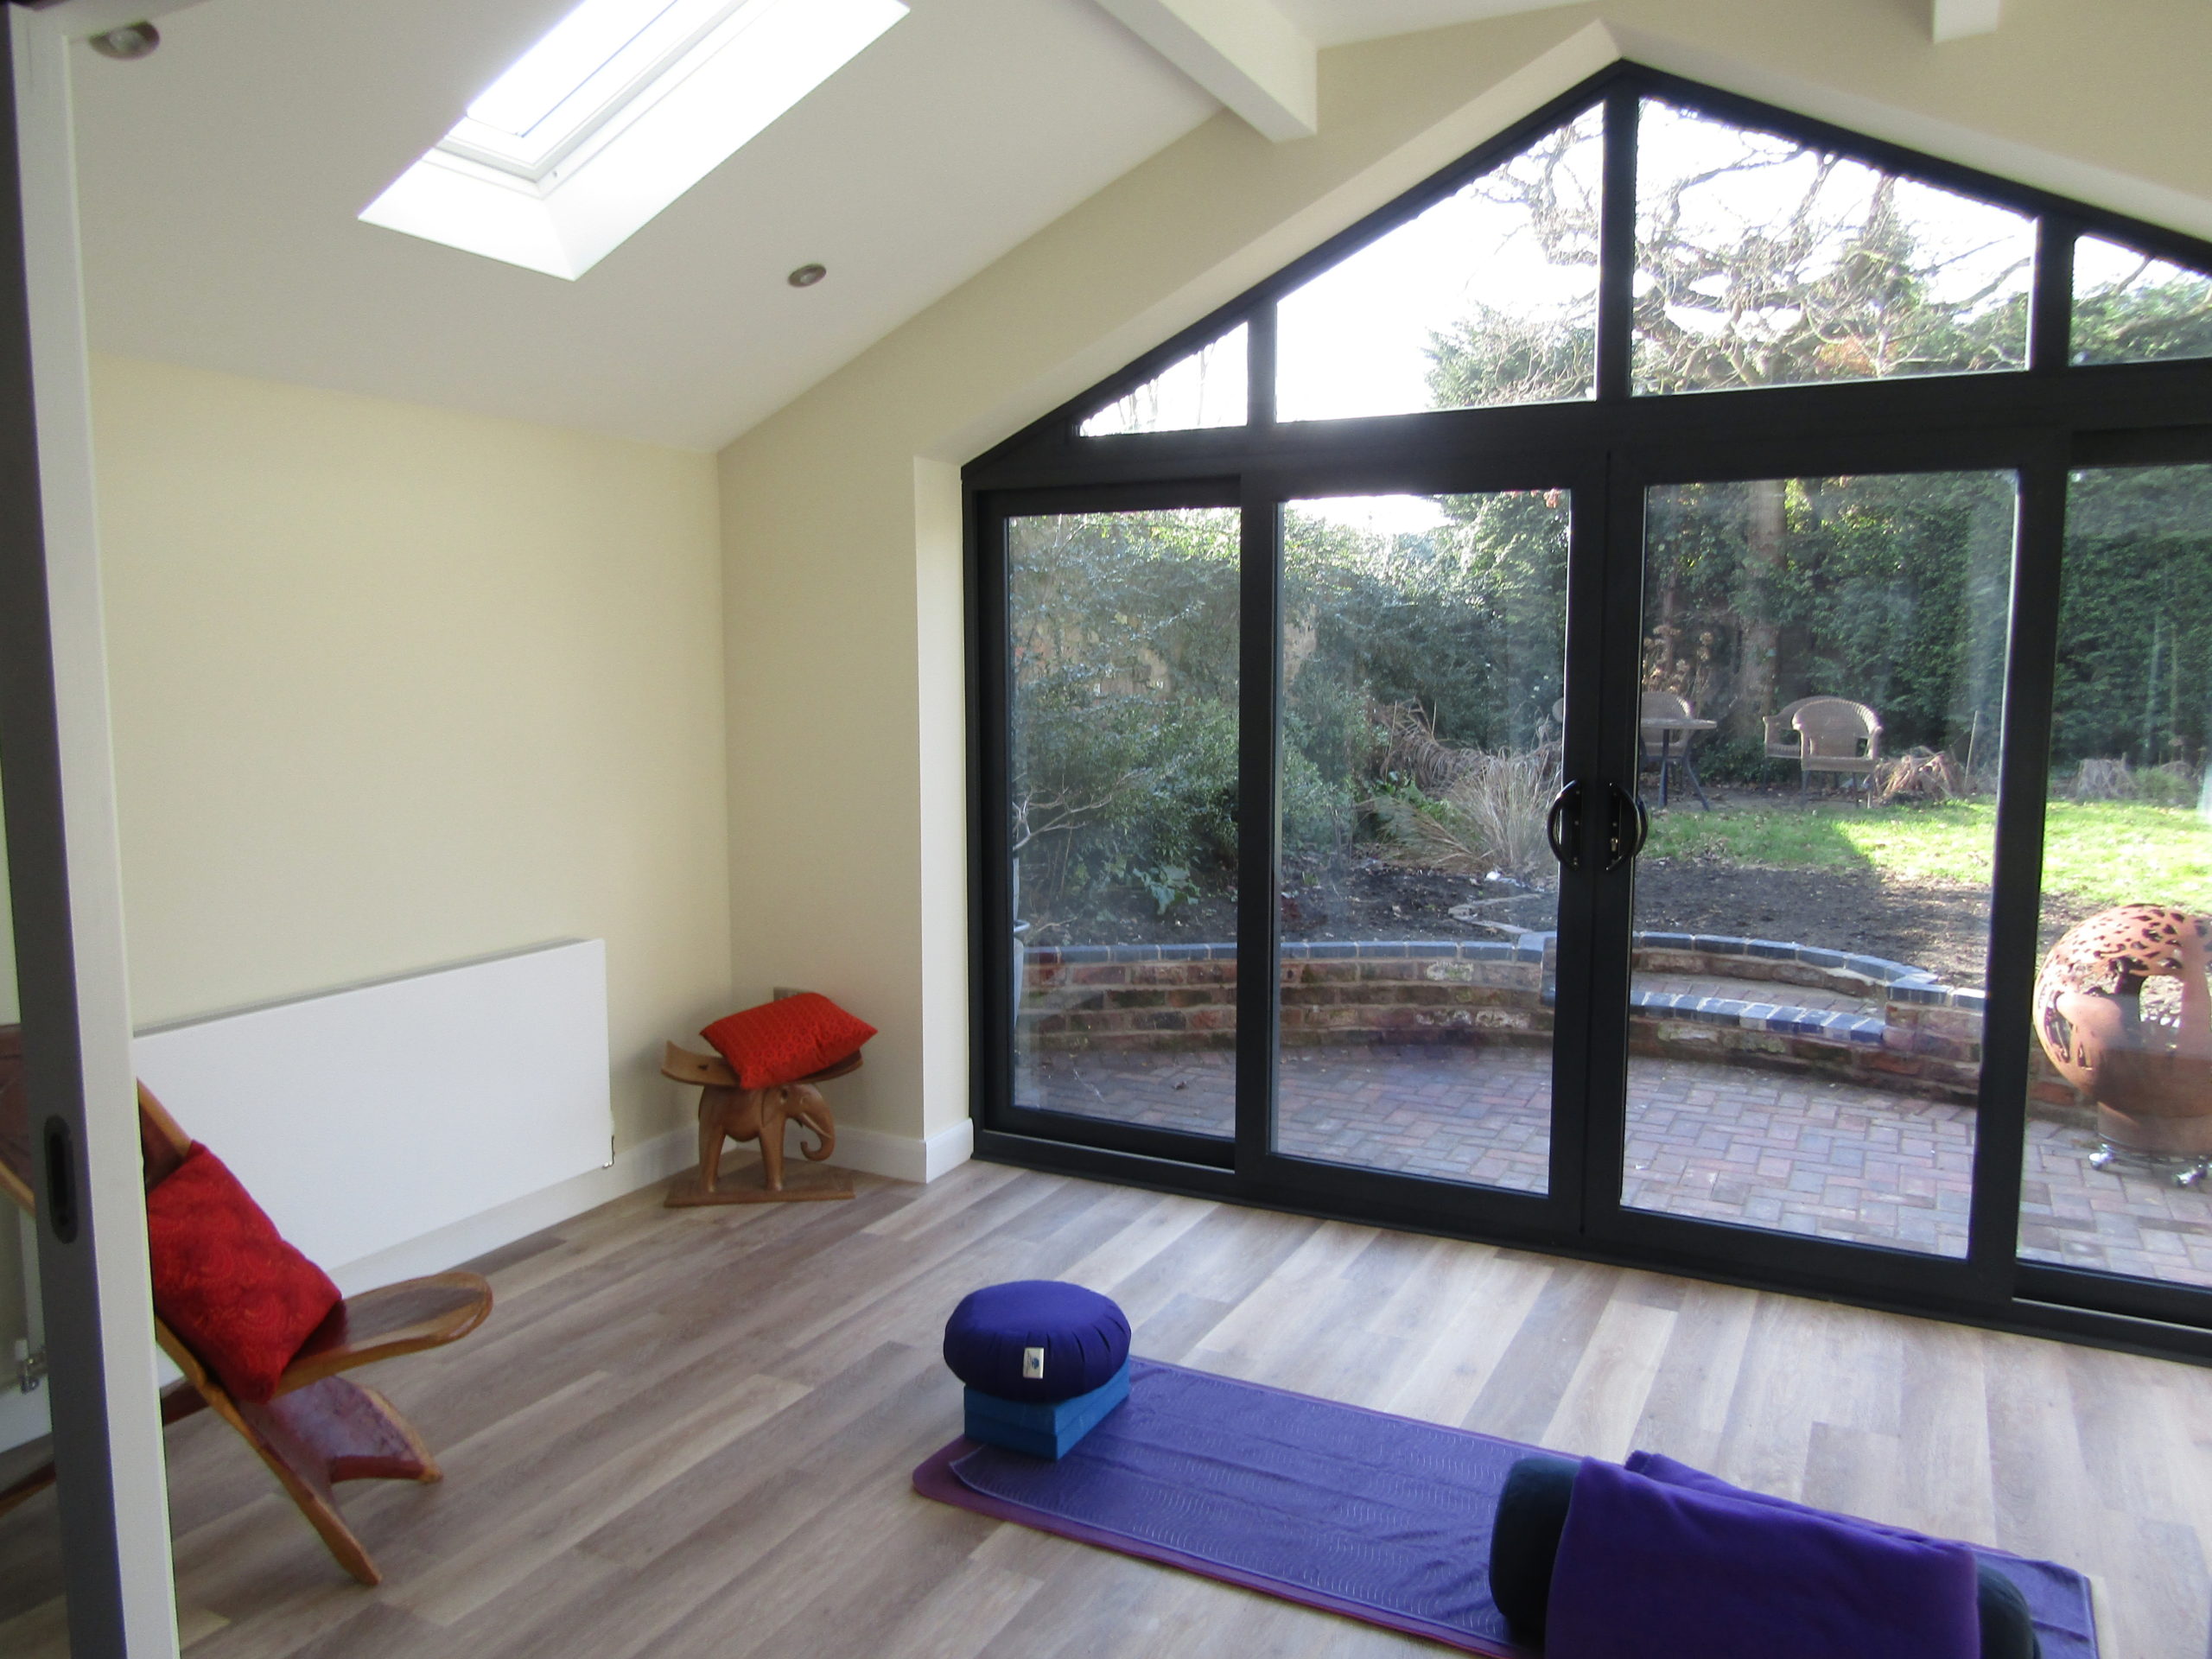 Yoga mat and block inside garage conversion